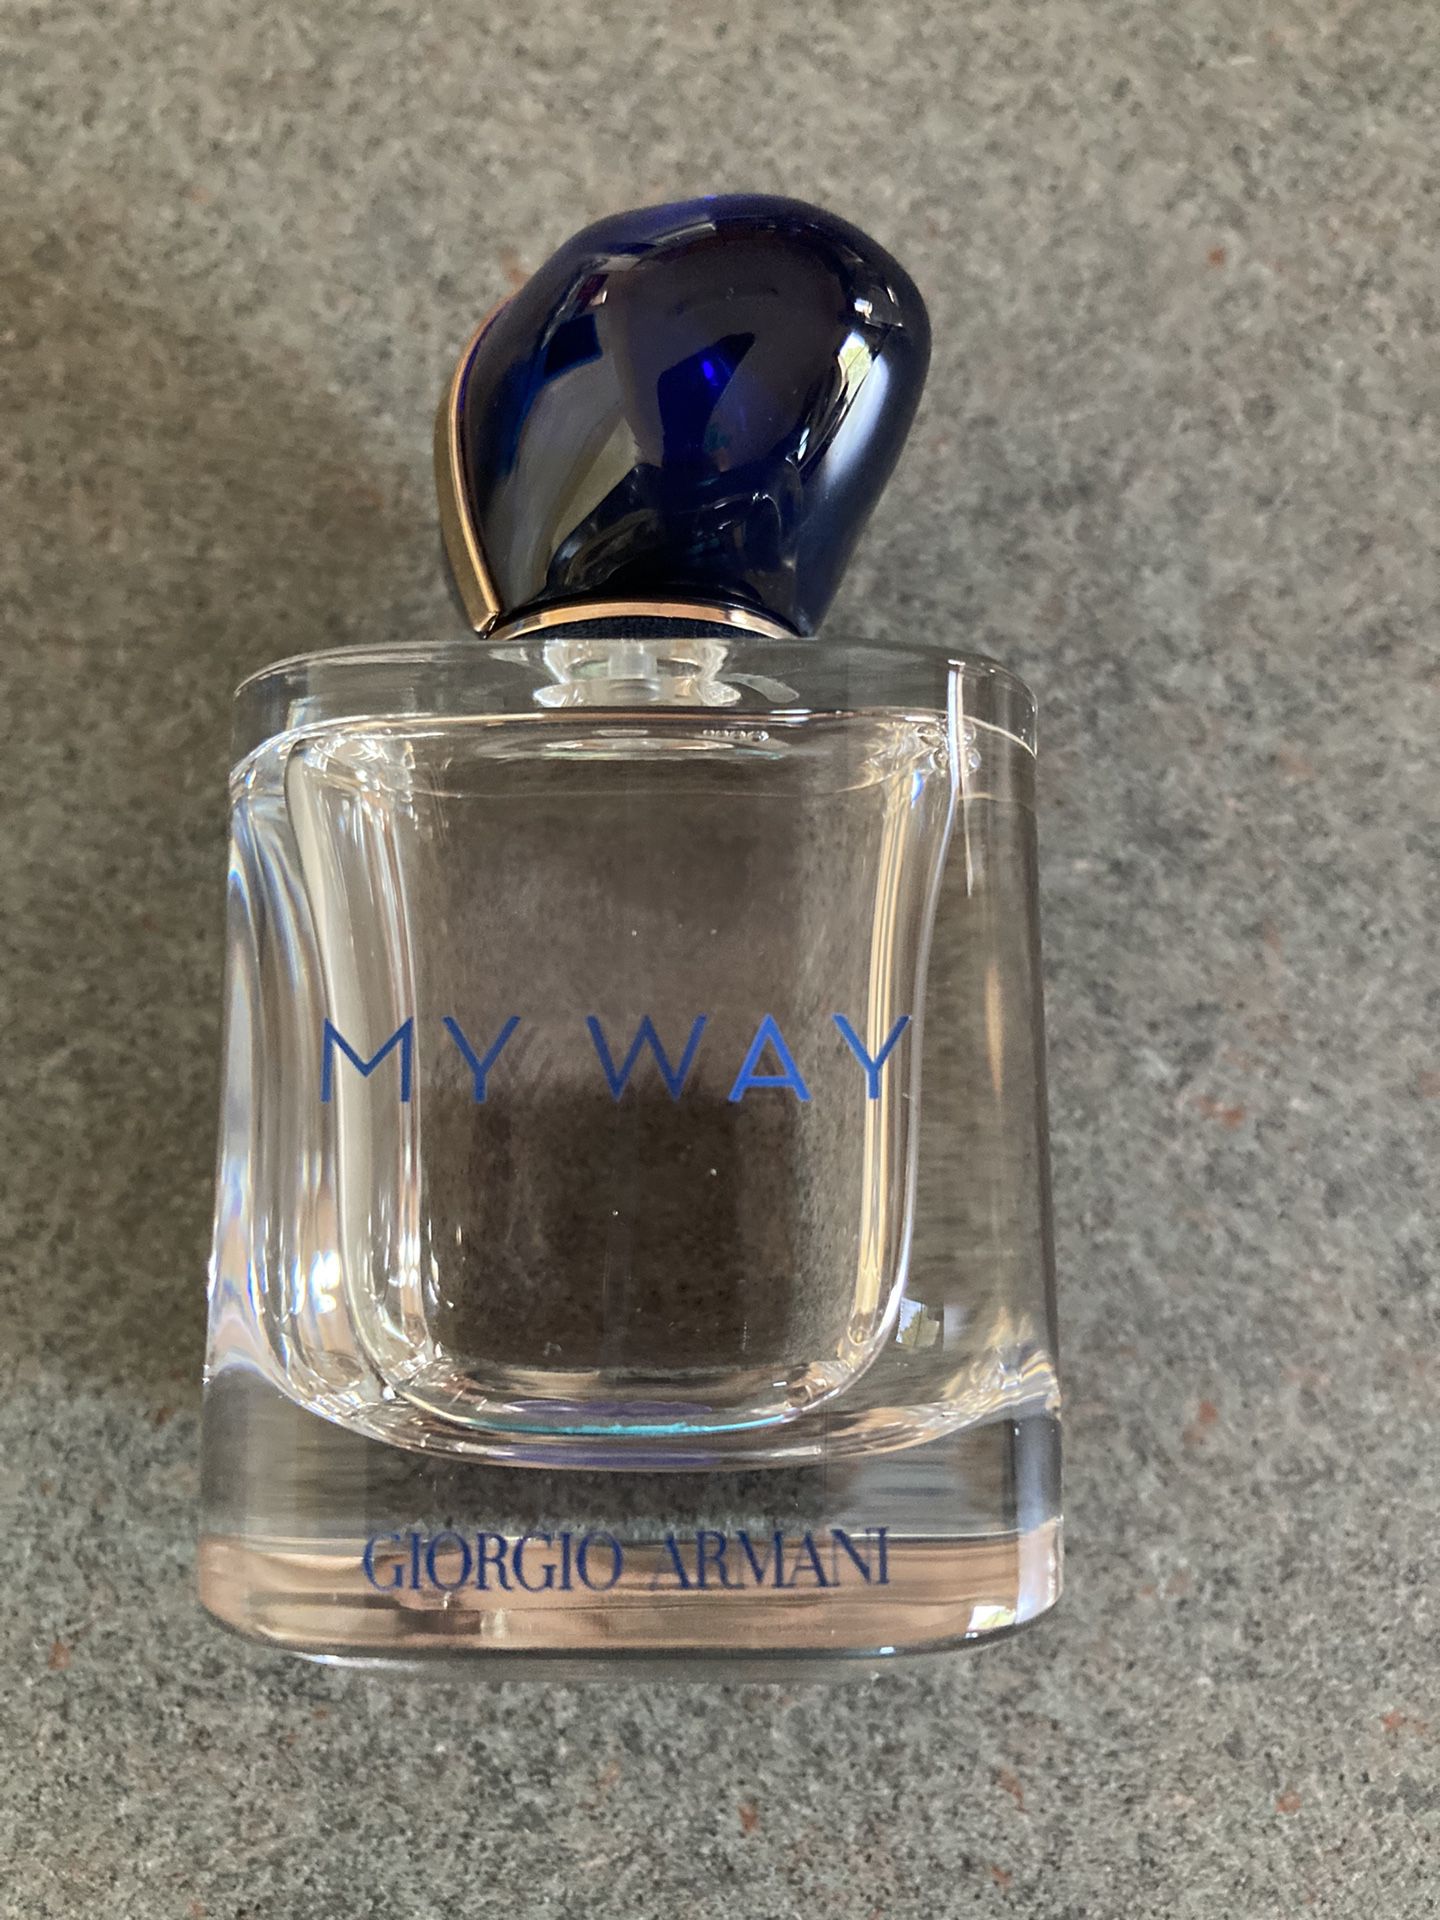 Giorgio Armani My Way Parfum (1.7 OZ)